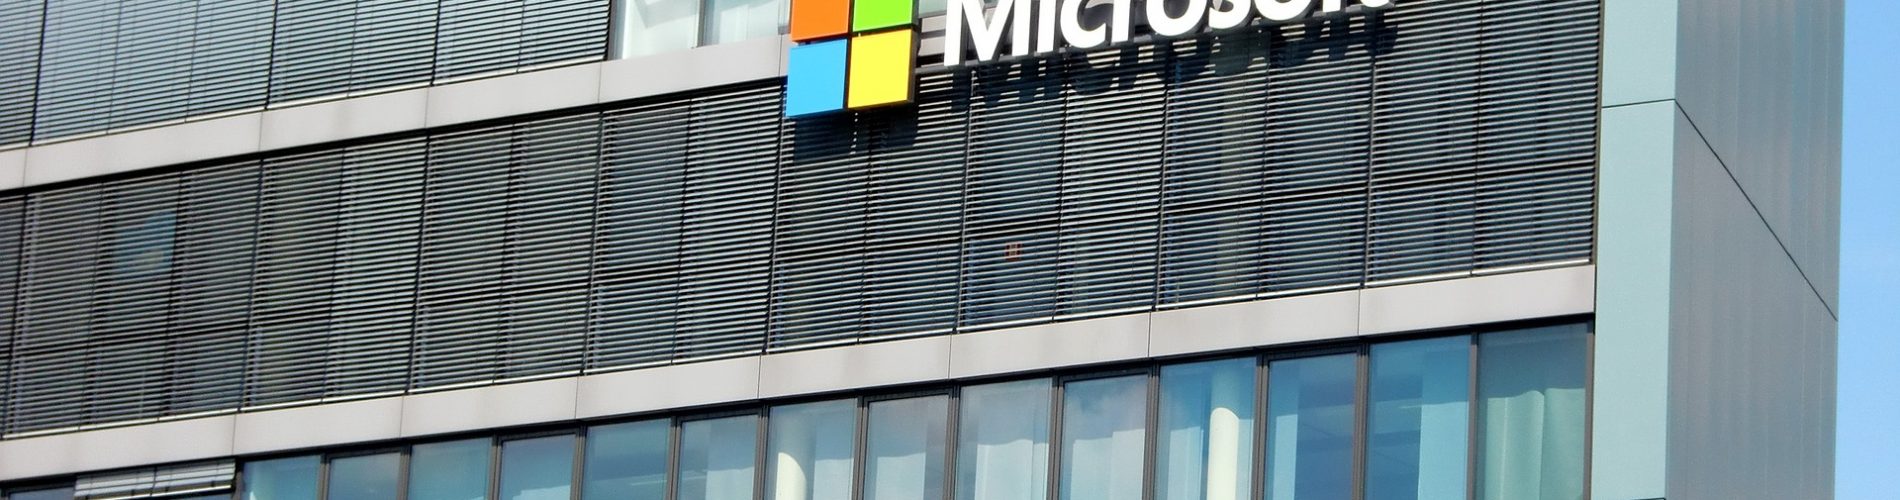 Microsoft logo on a green light building